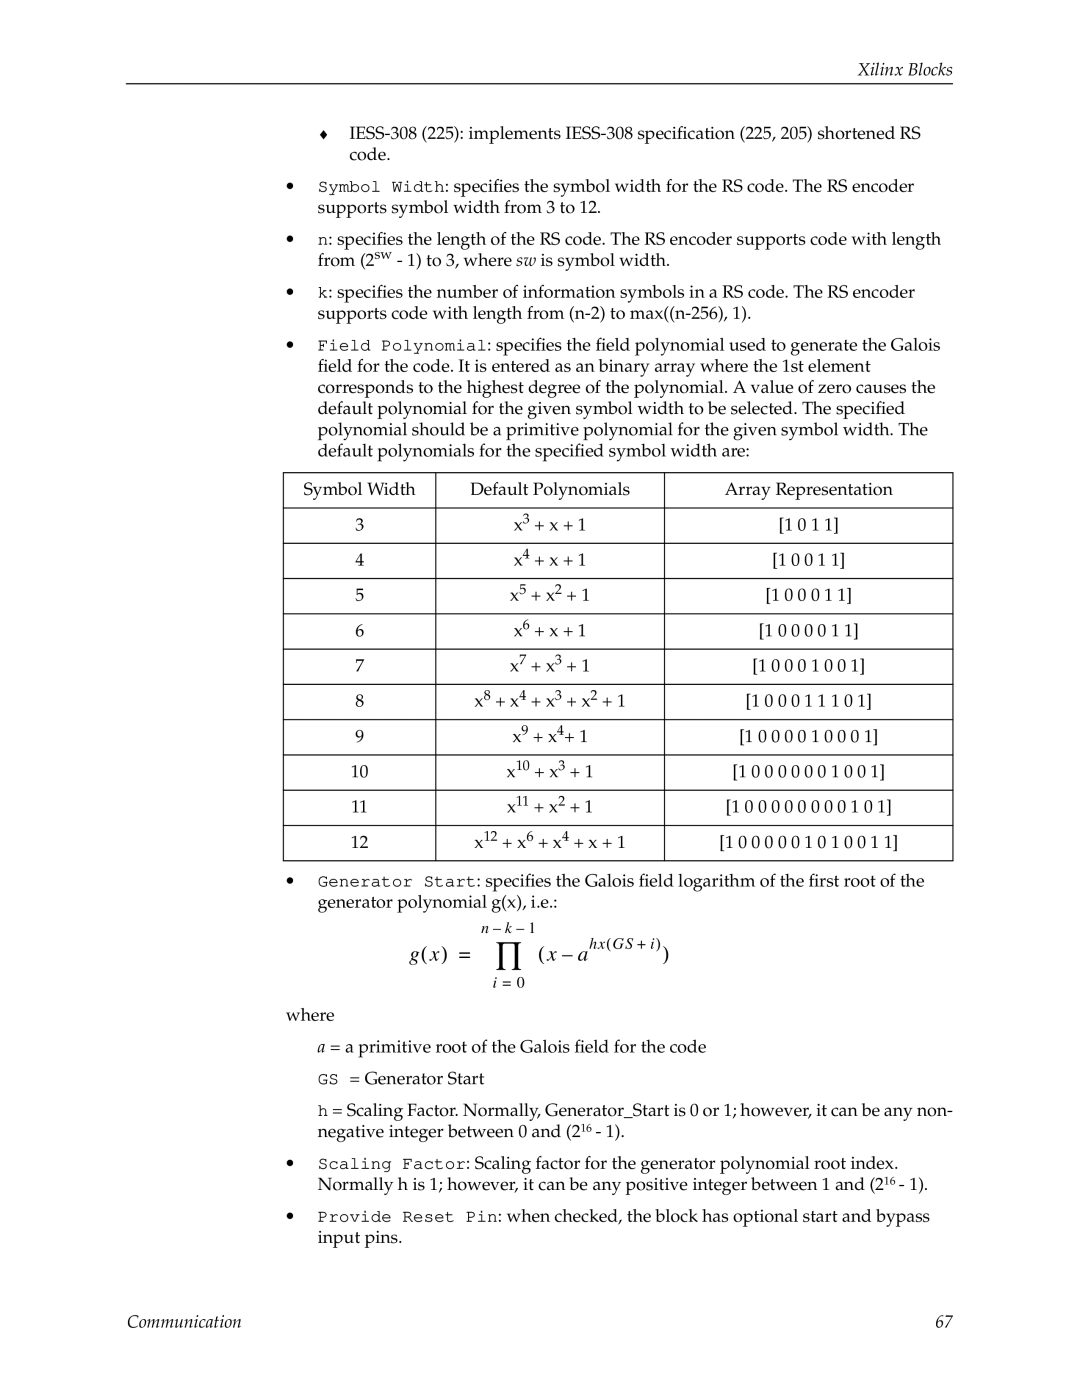 Xilinx V2.1 manual g x = ∏ x –ahxGS + i i =, Xilinx Blocks, Communication 